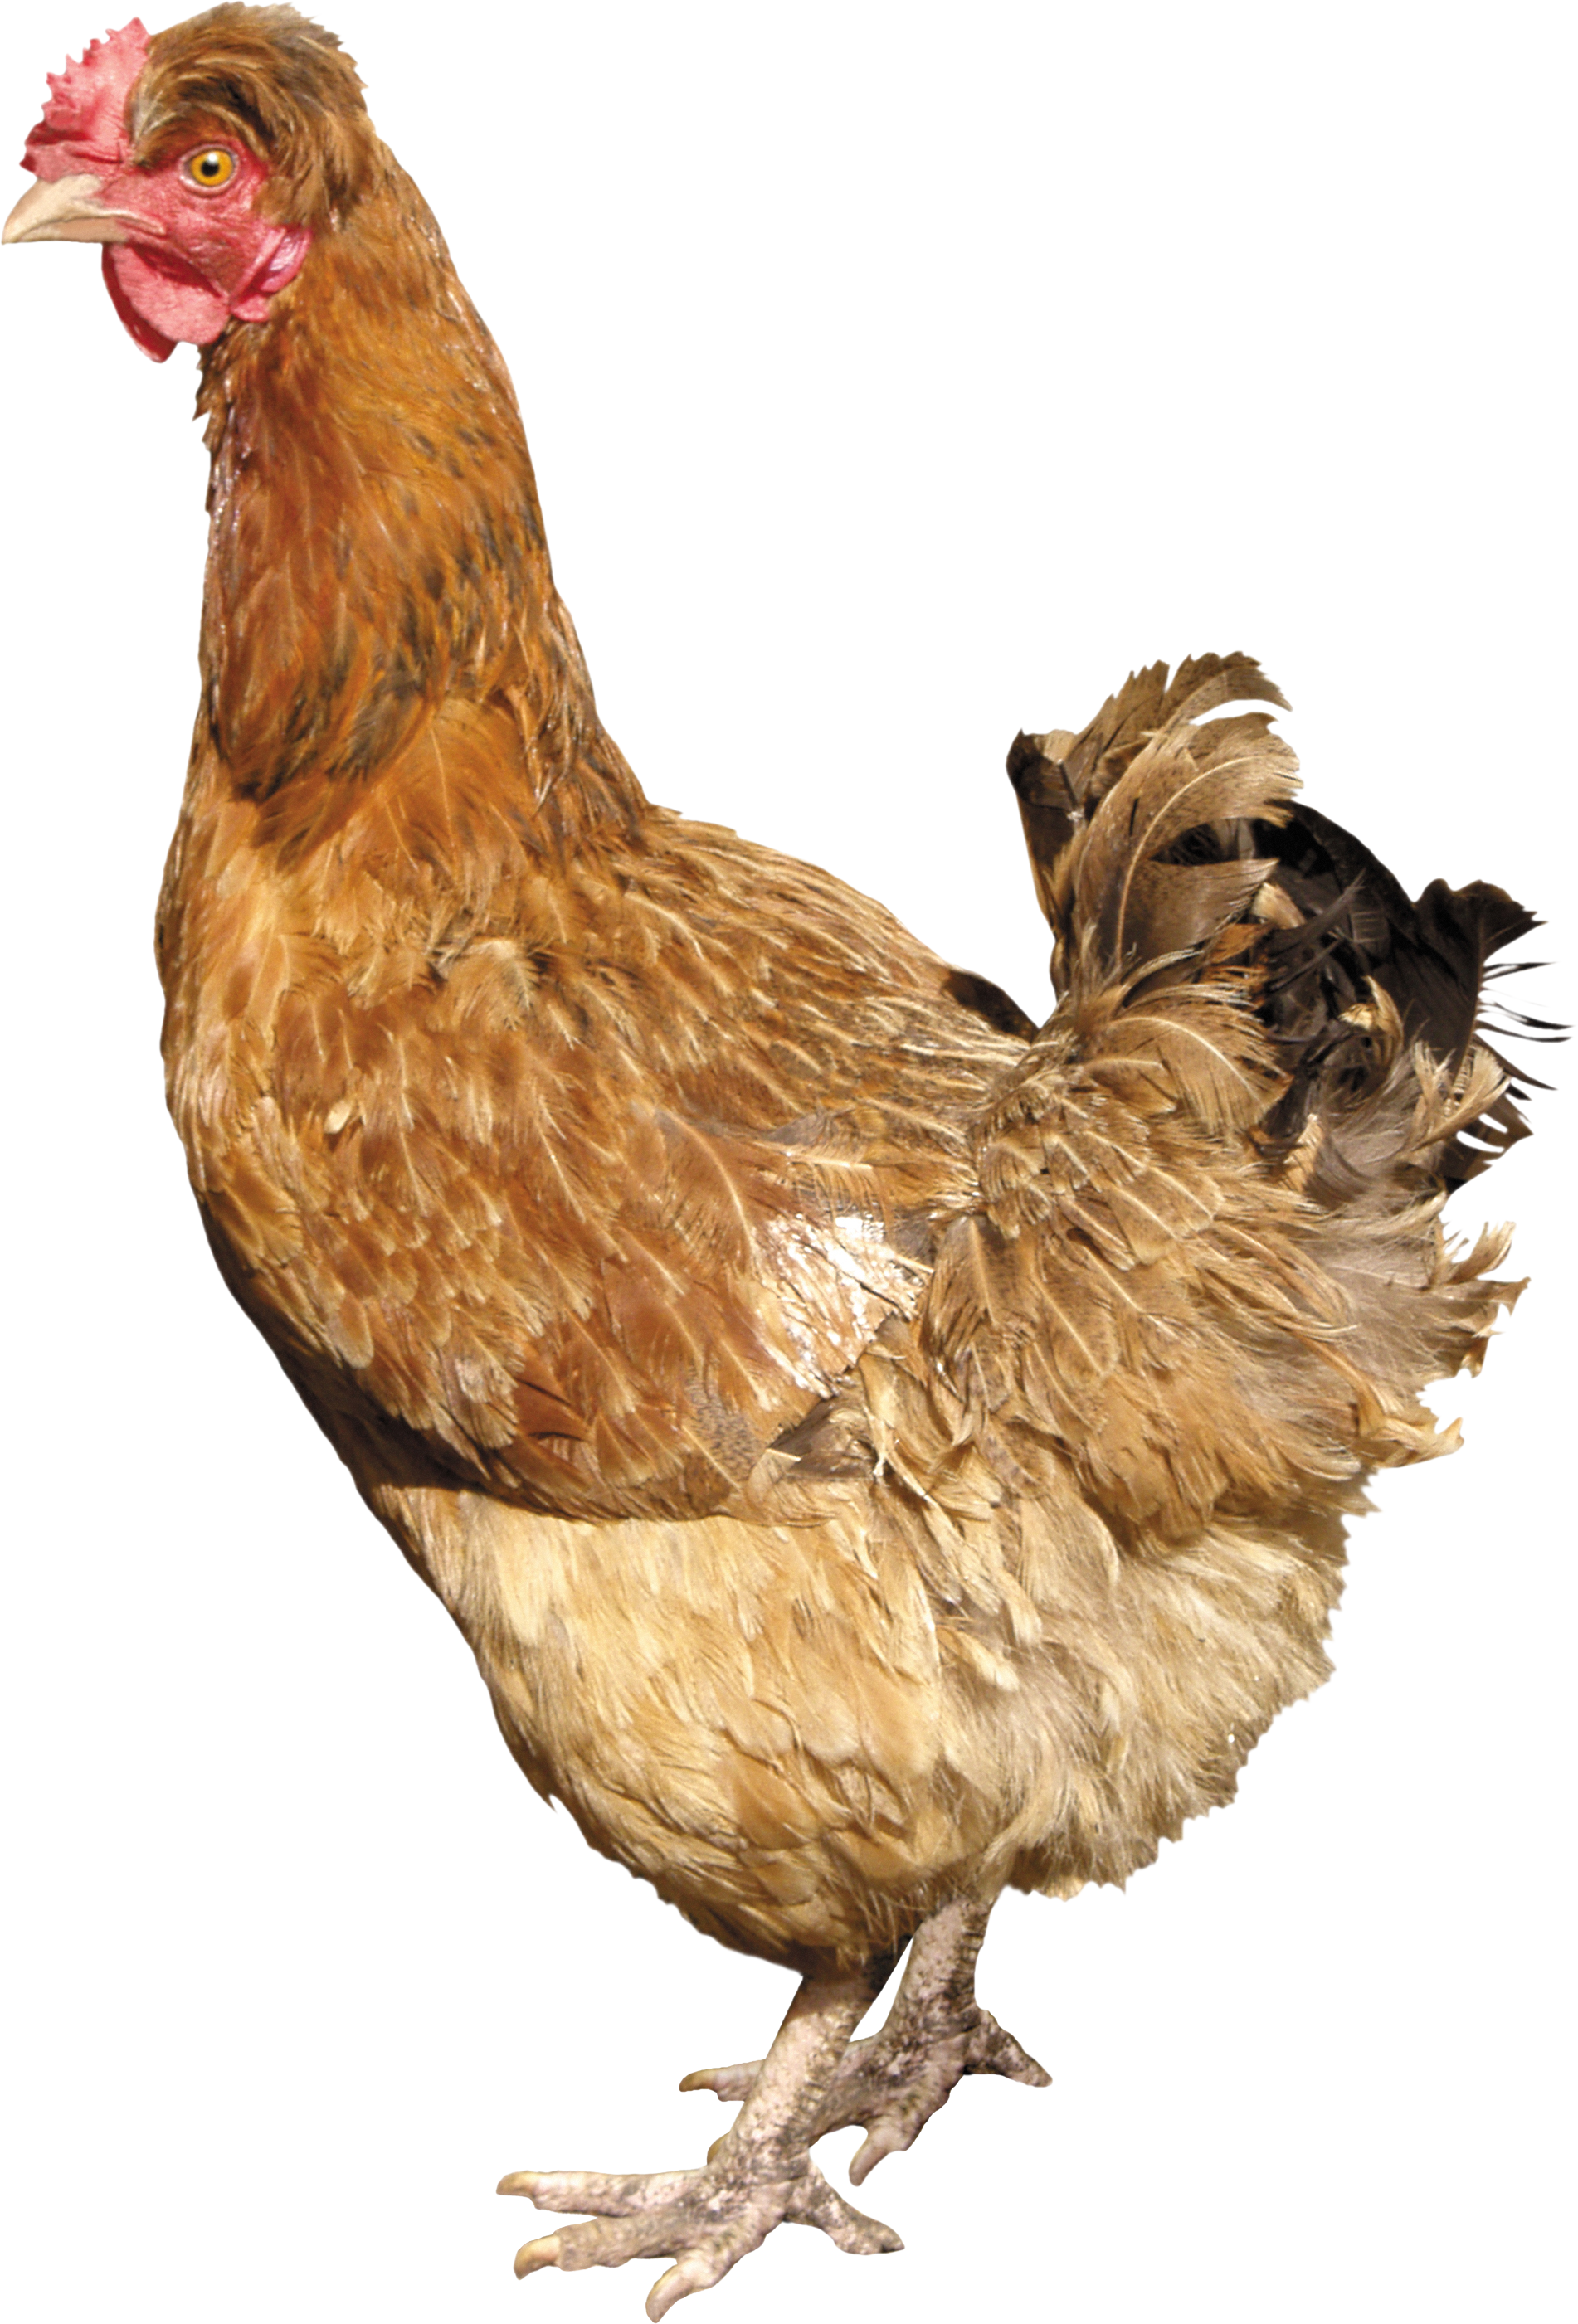 Cute Chicken PNG HD - 121133